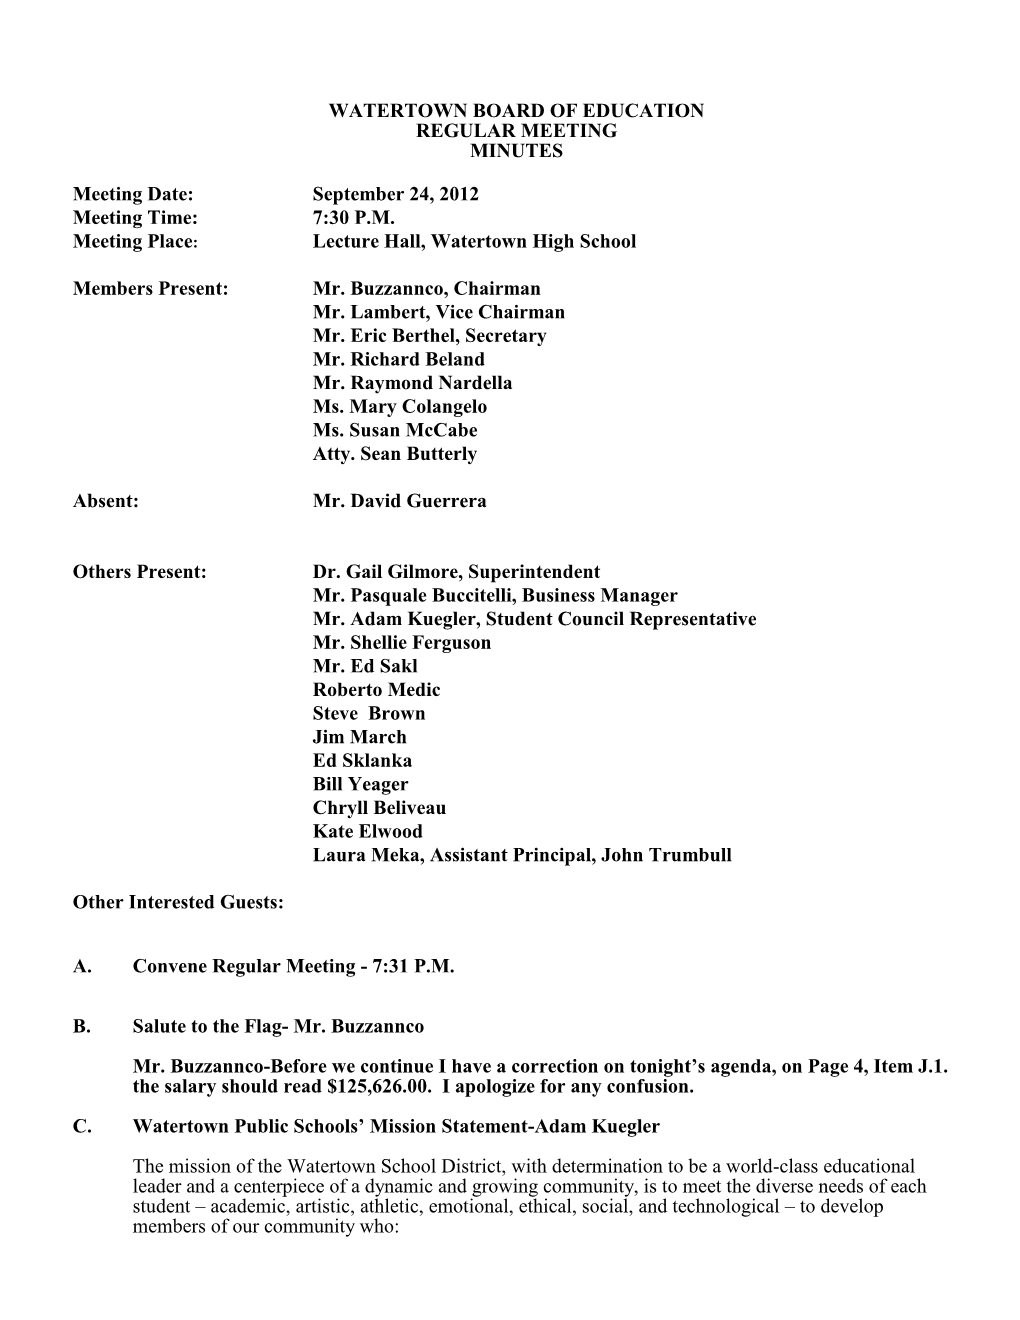 Watertown Board of Education Regular Meeting Minutes